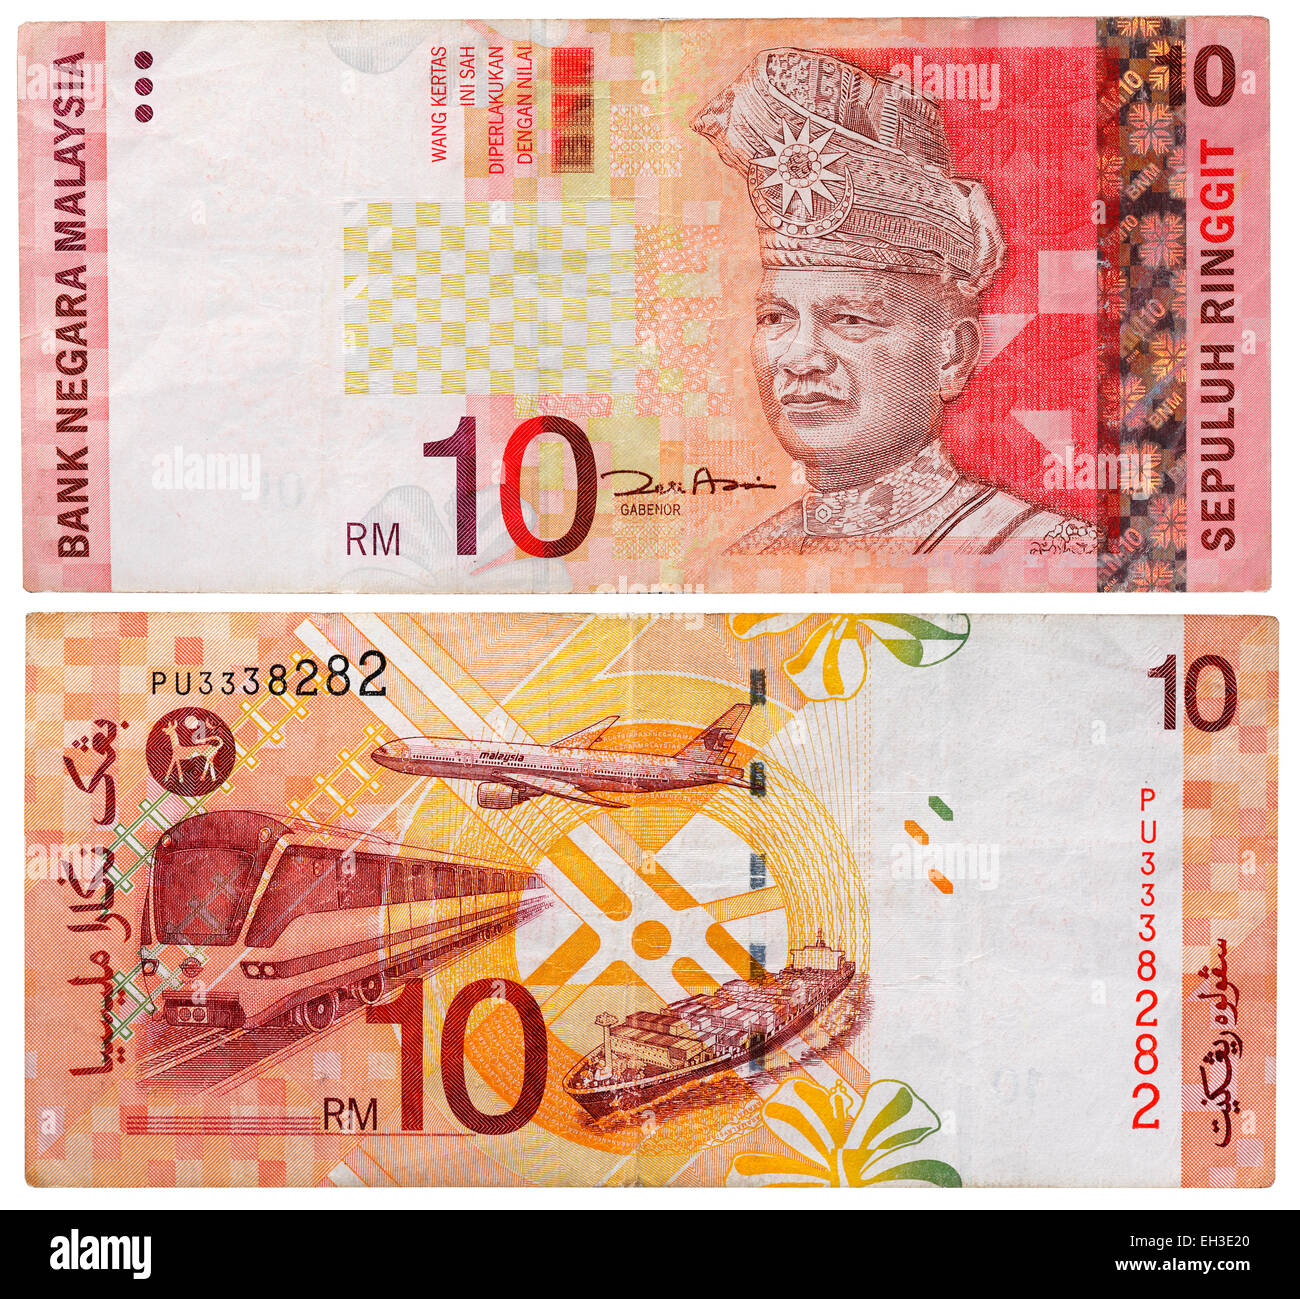 10 Ringgit Banknote, Abdul Rahman von Negeri Sembilan, Malaysia, 2001 Stockfoto